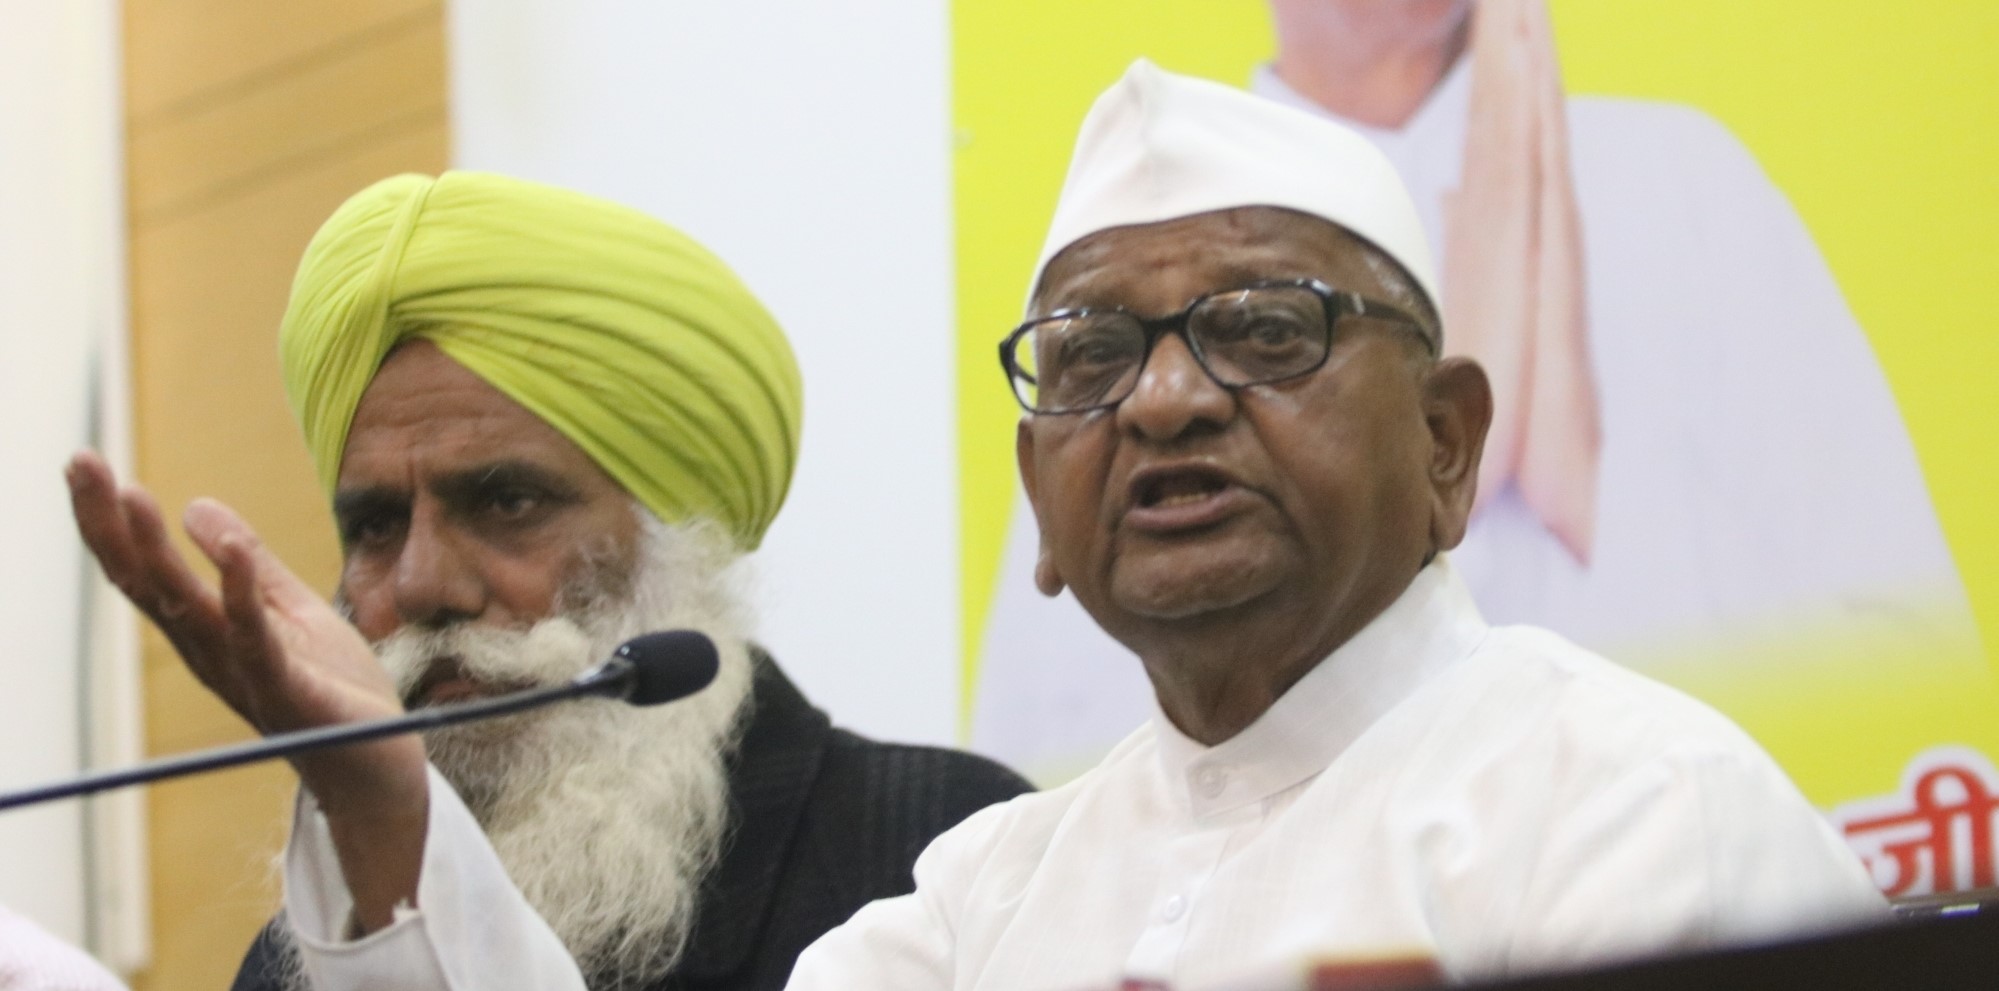 Anna Hazare health concerns grow as protest enters sixth day 